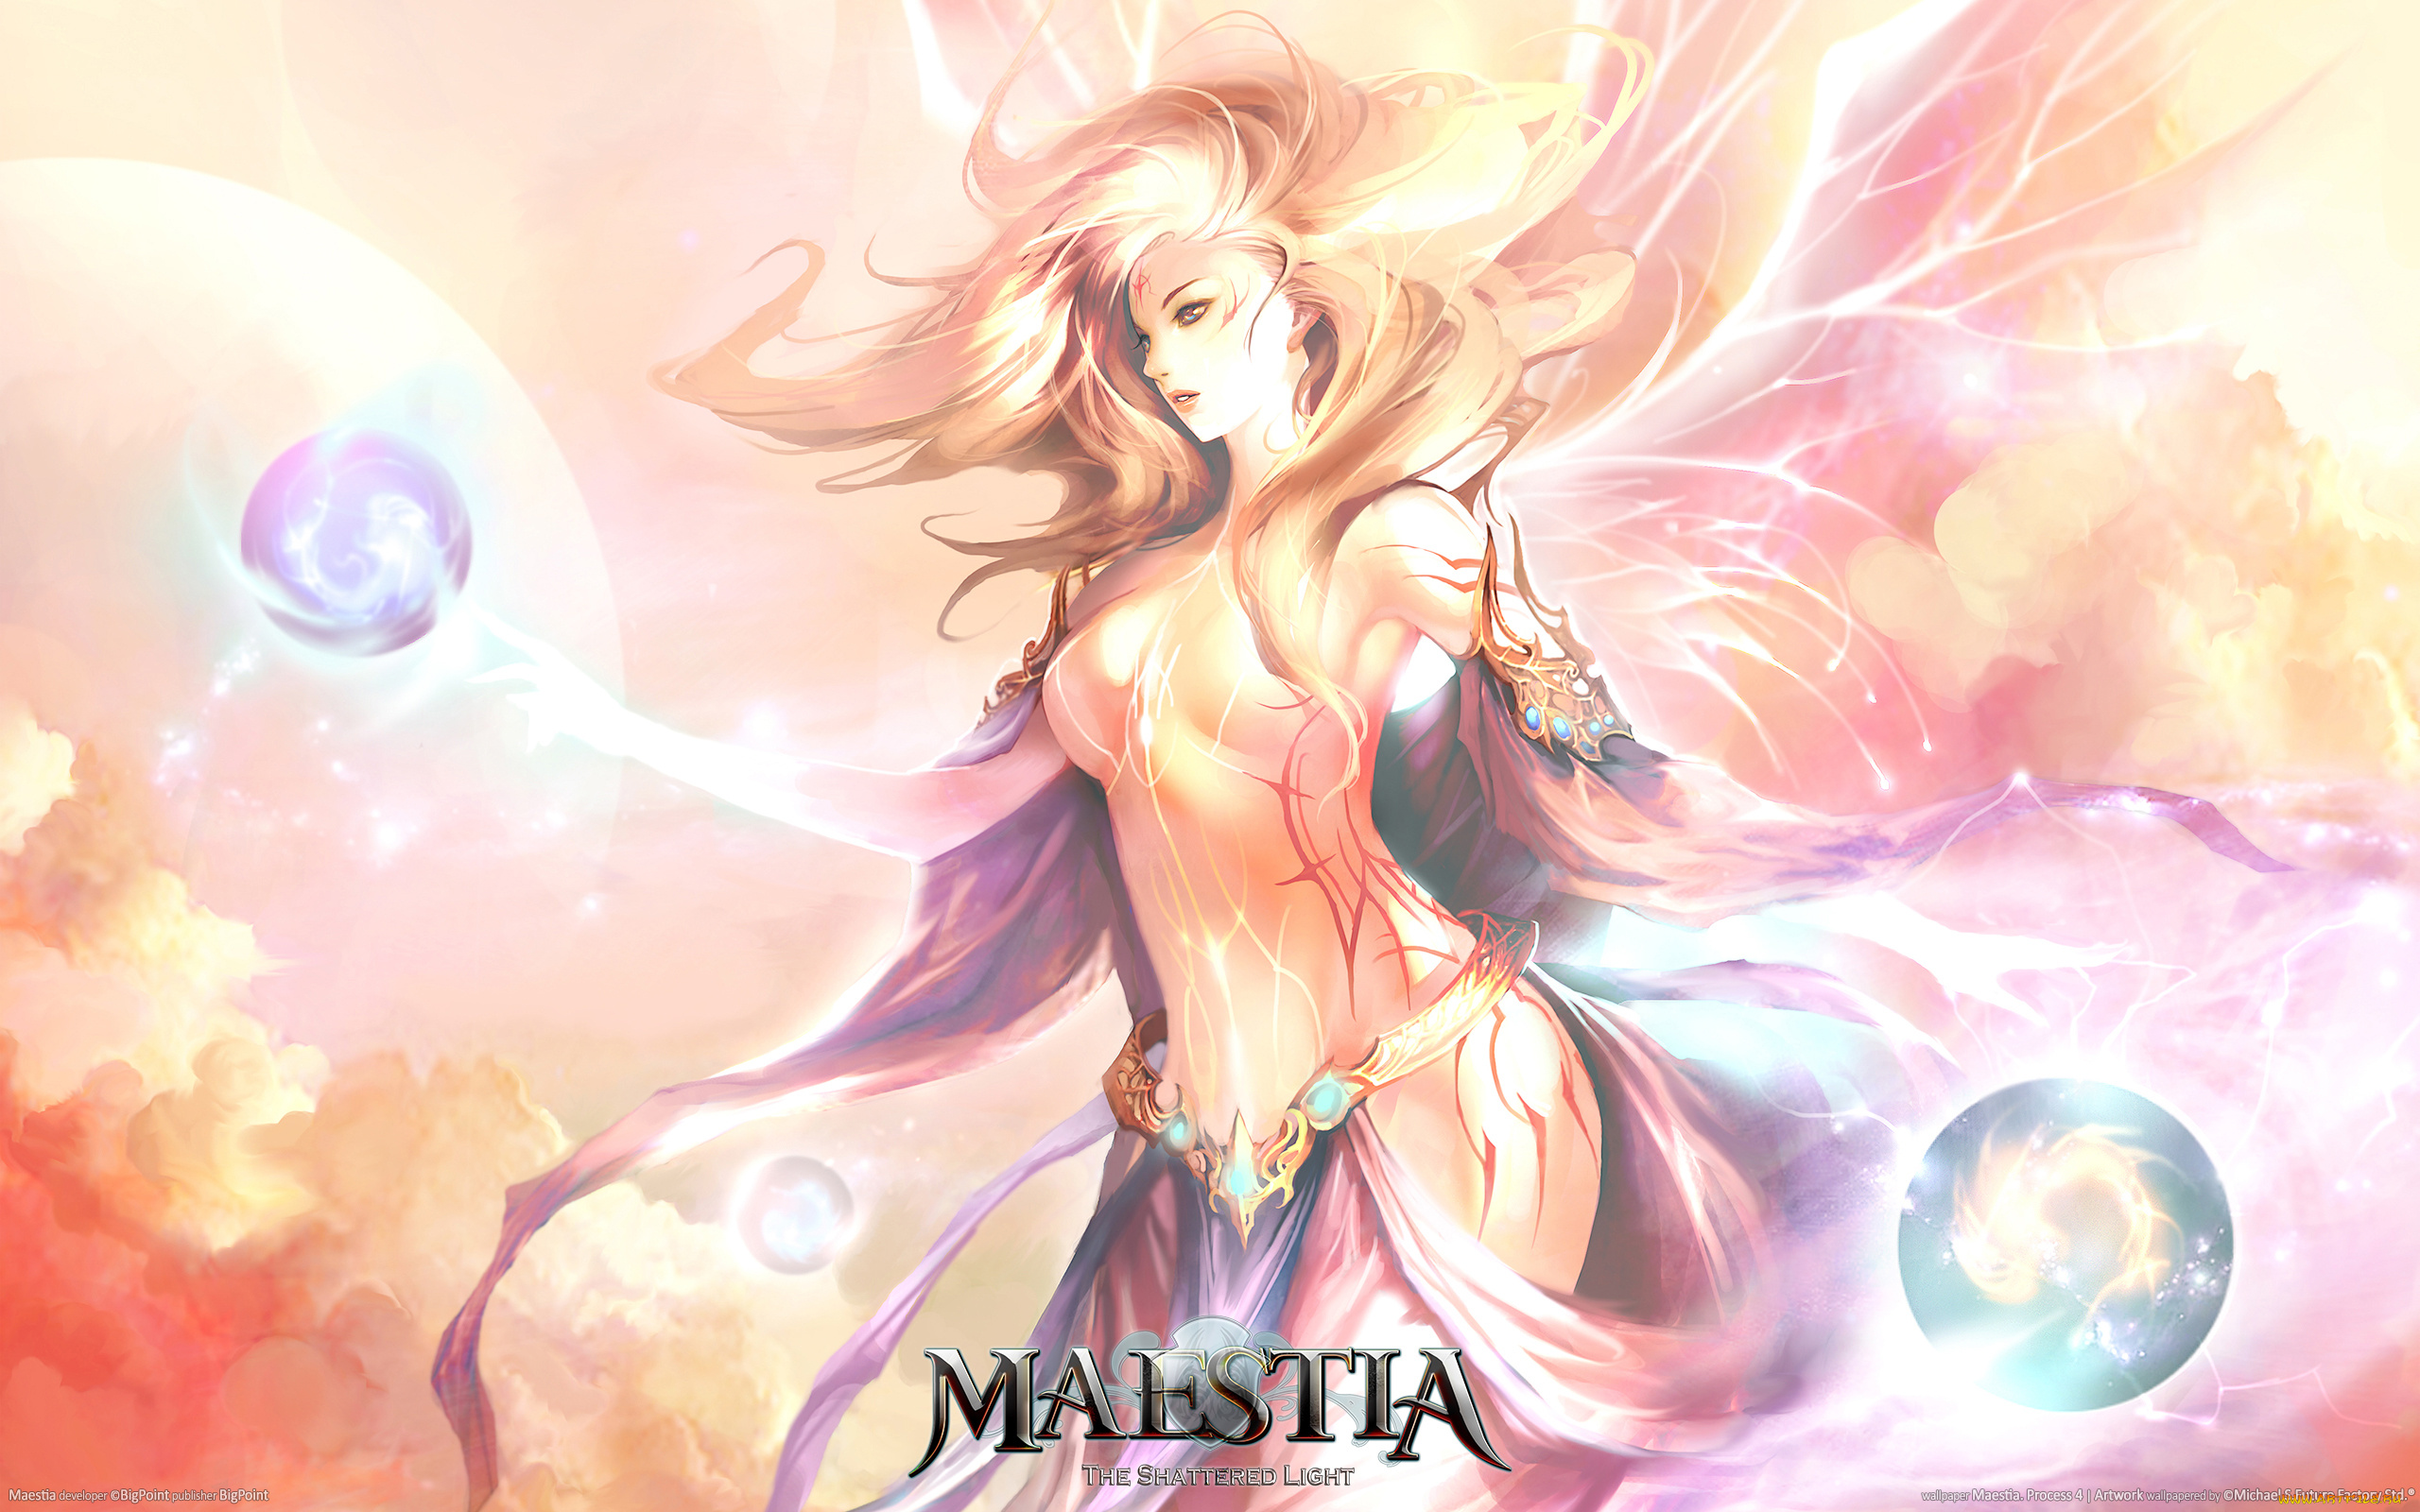 maestia, artwork, видео, игры